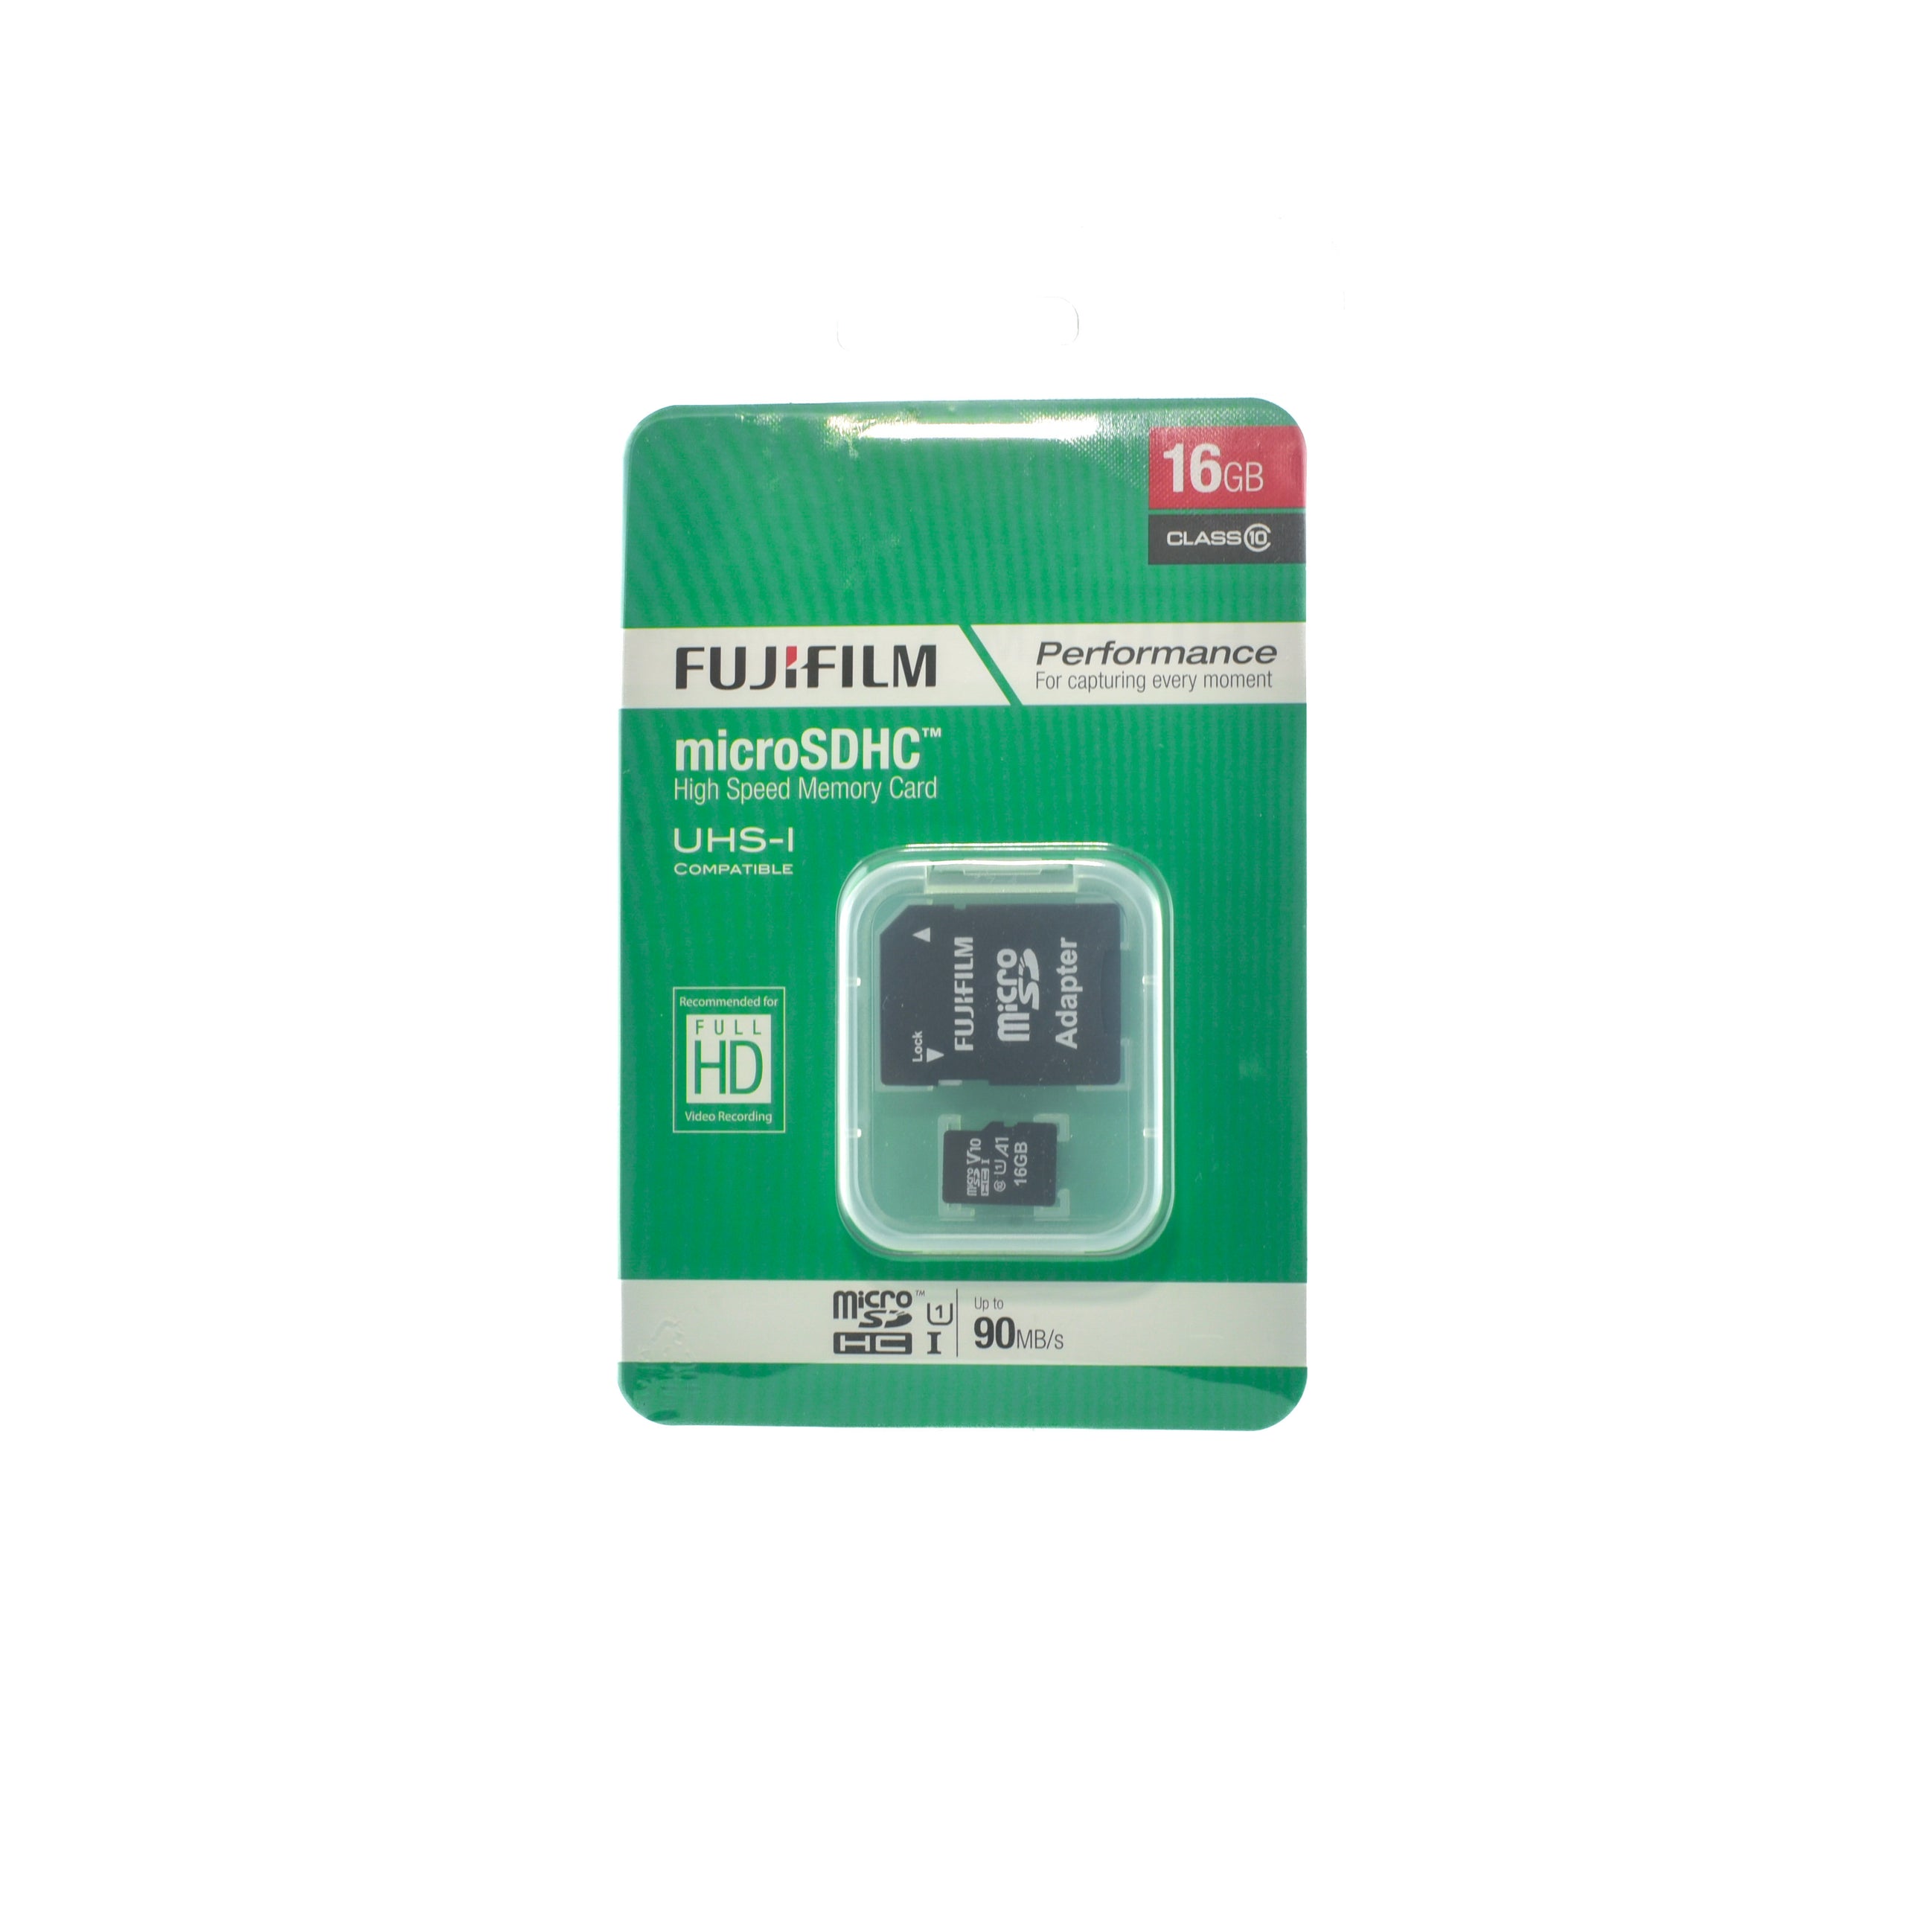 Fujifilm 16 GB Micro SDHC Card Performance